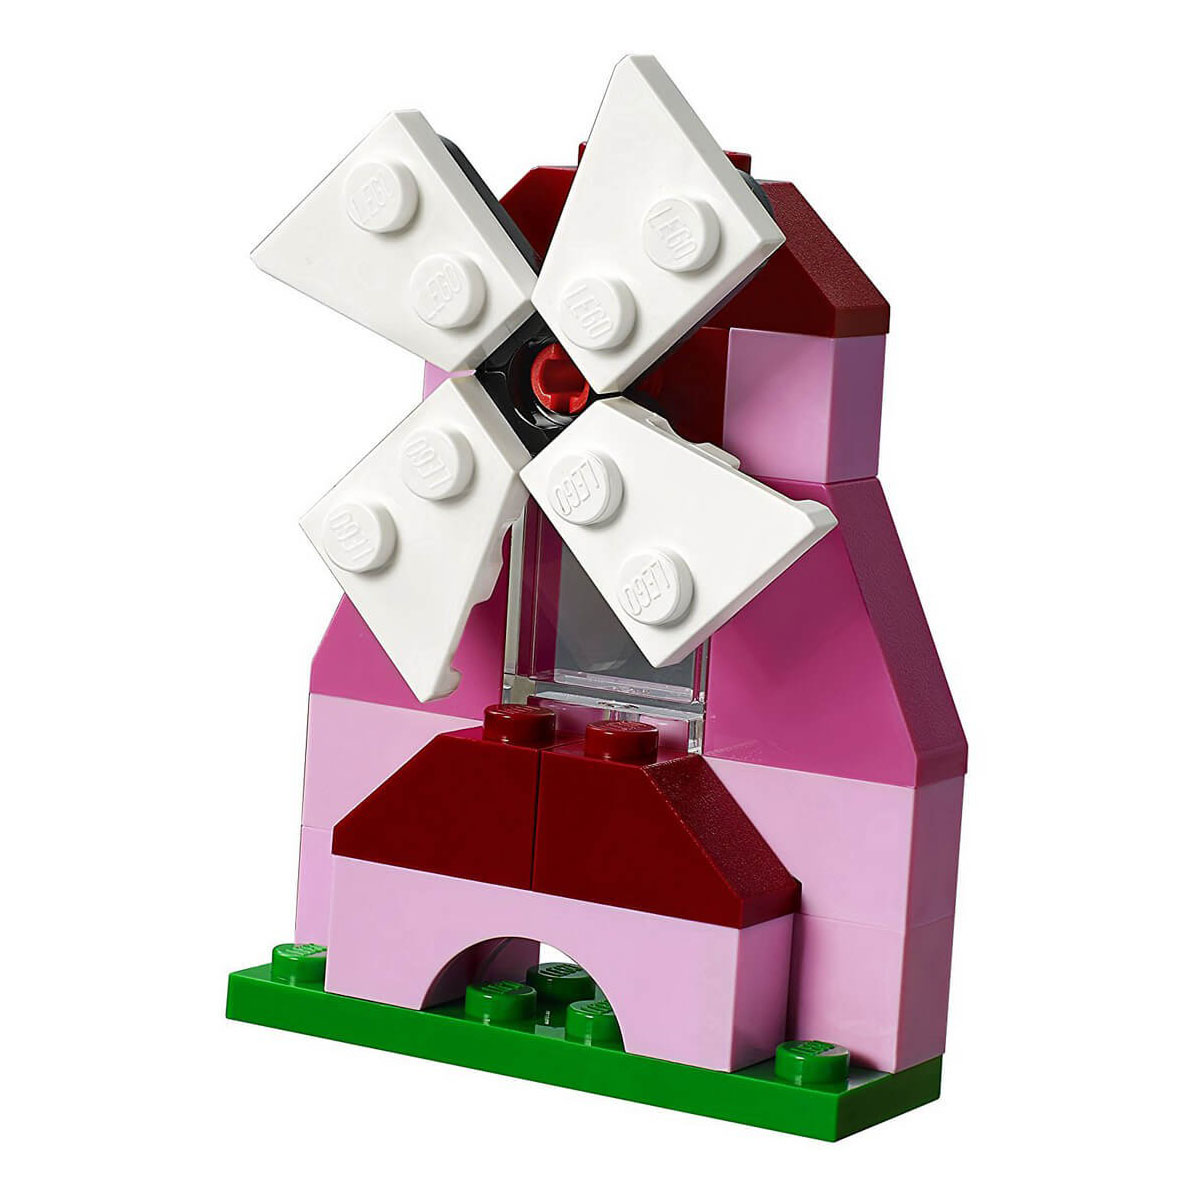 Lego Creativity Box Red 10707